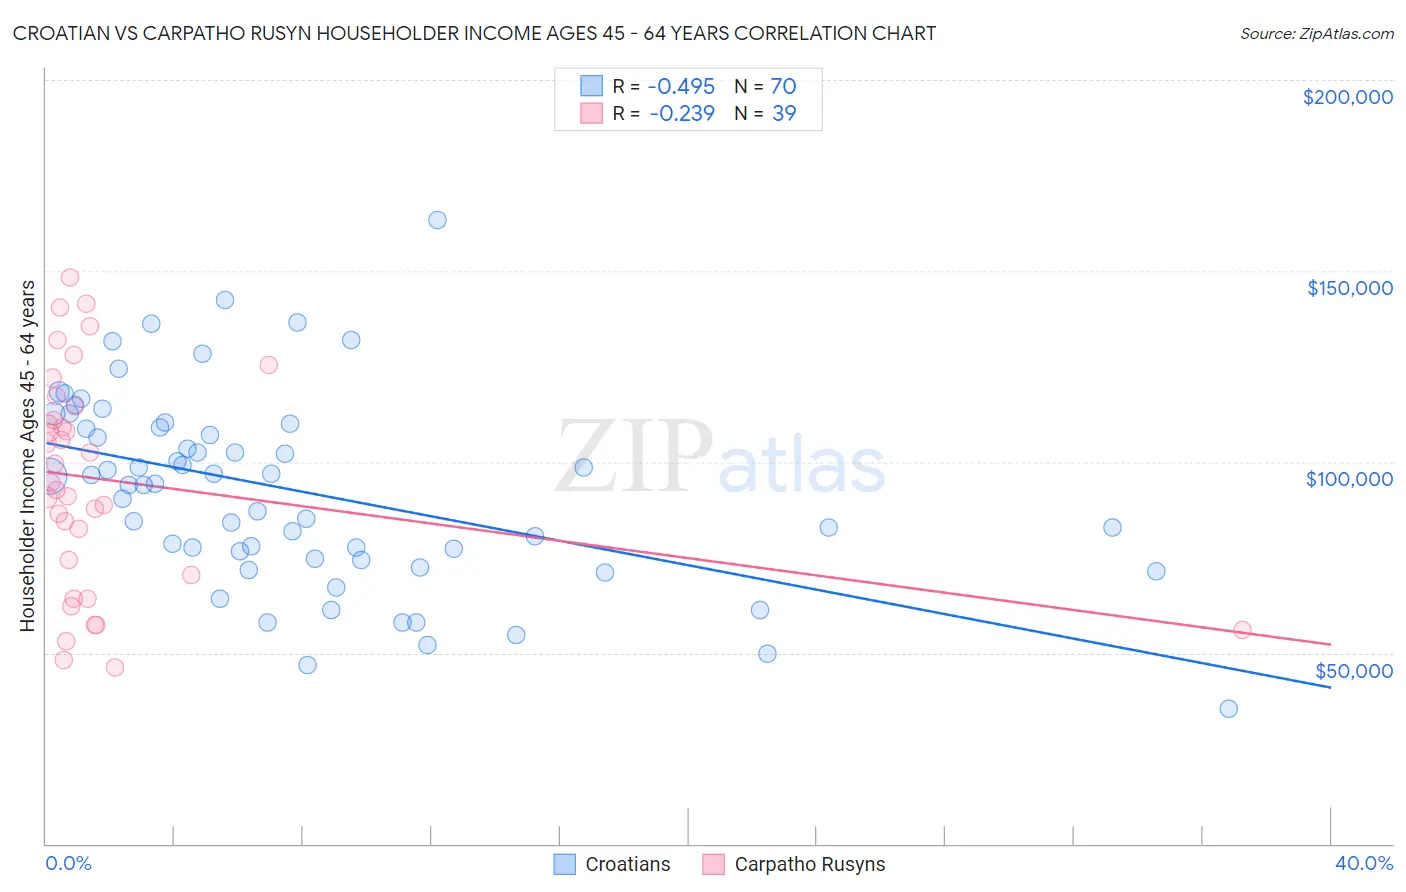 Croatian vs Carpatho Rusyn Householder Income Ages 45 - 64 years